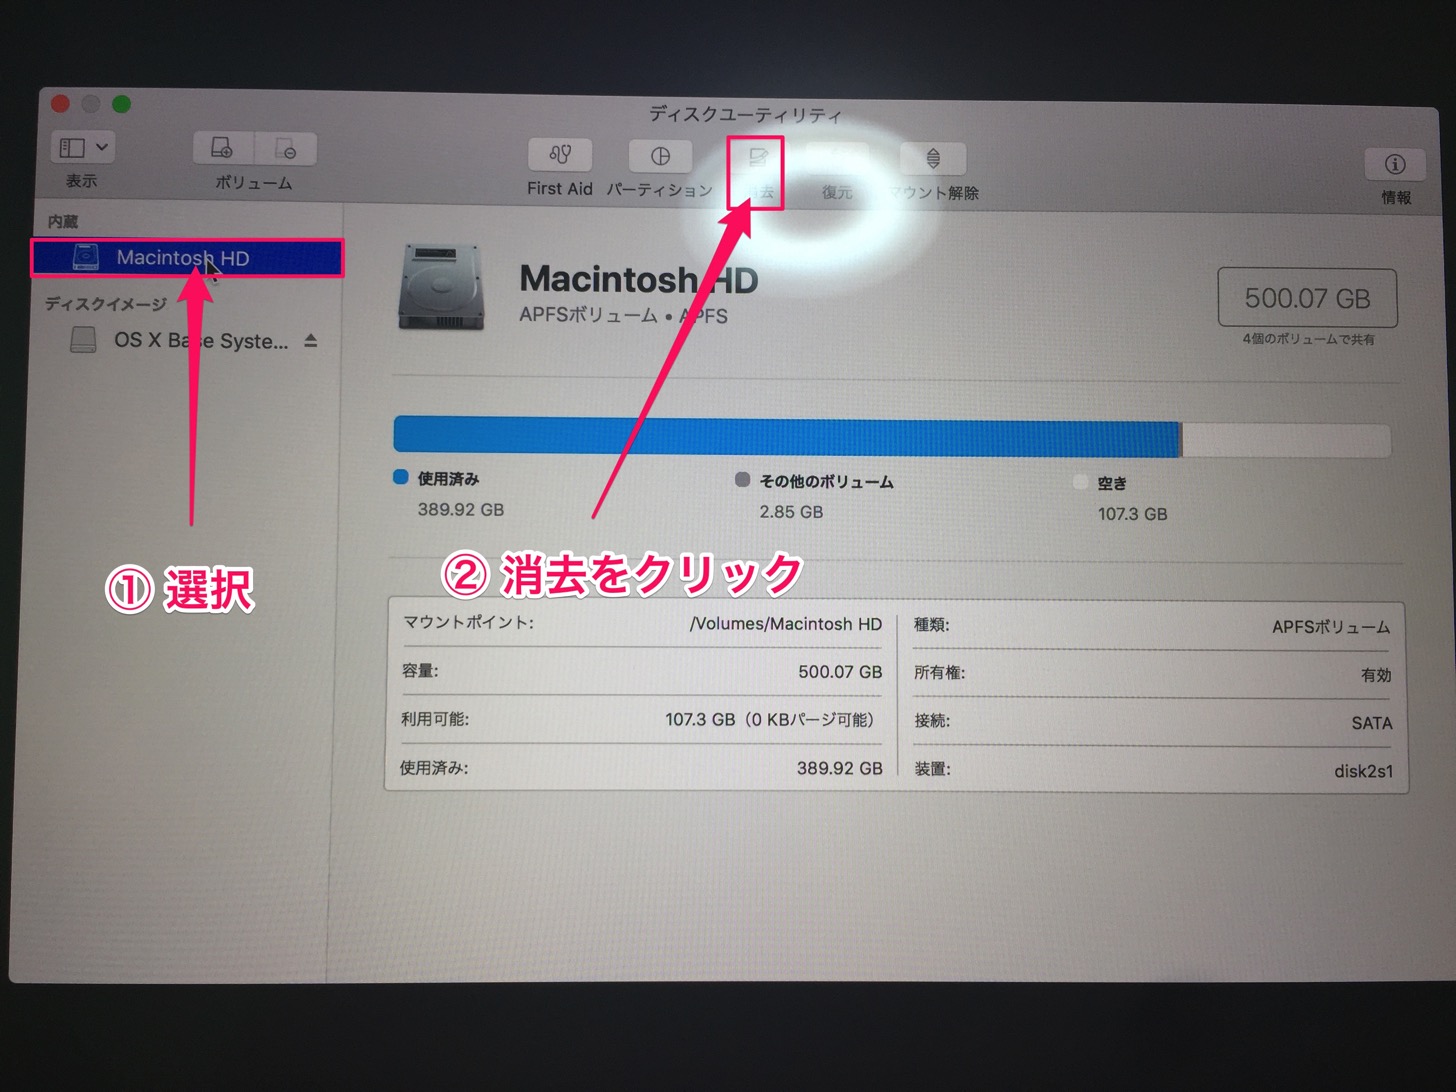 Macintosh HDを選択して消去をクリック